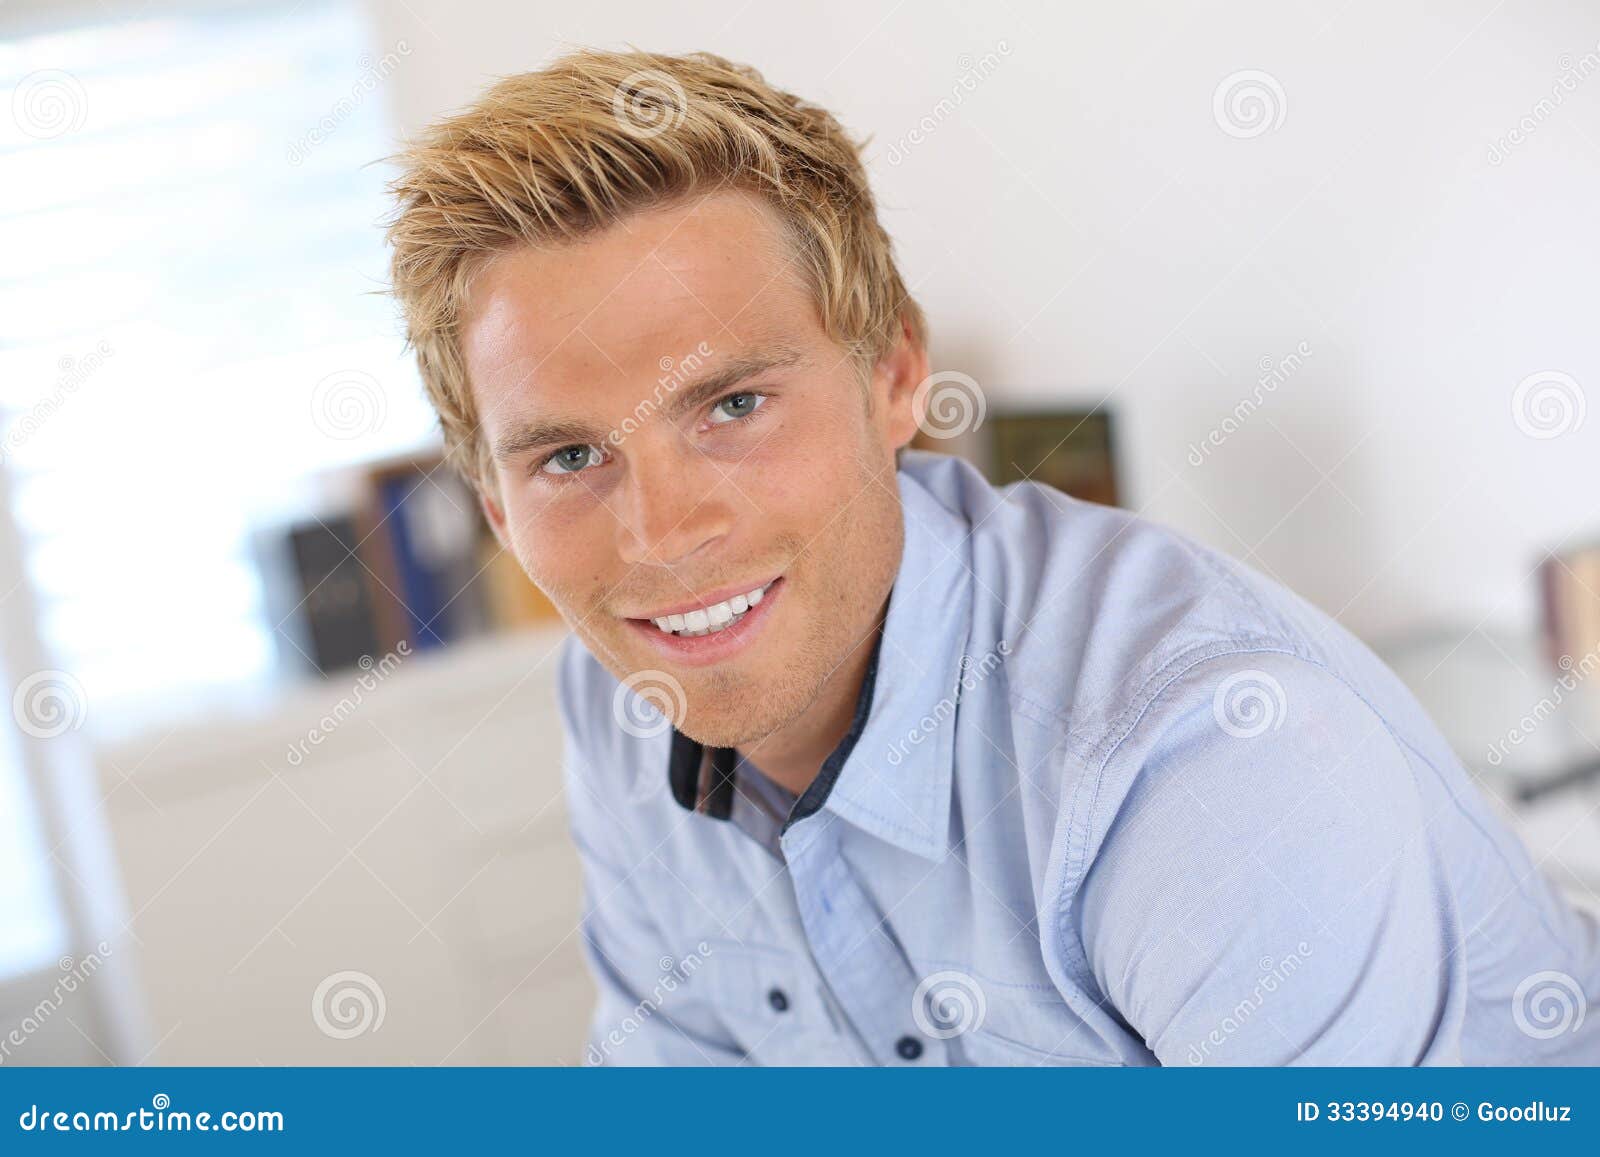 Augen blonde mann blaue haare Haar